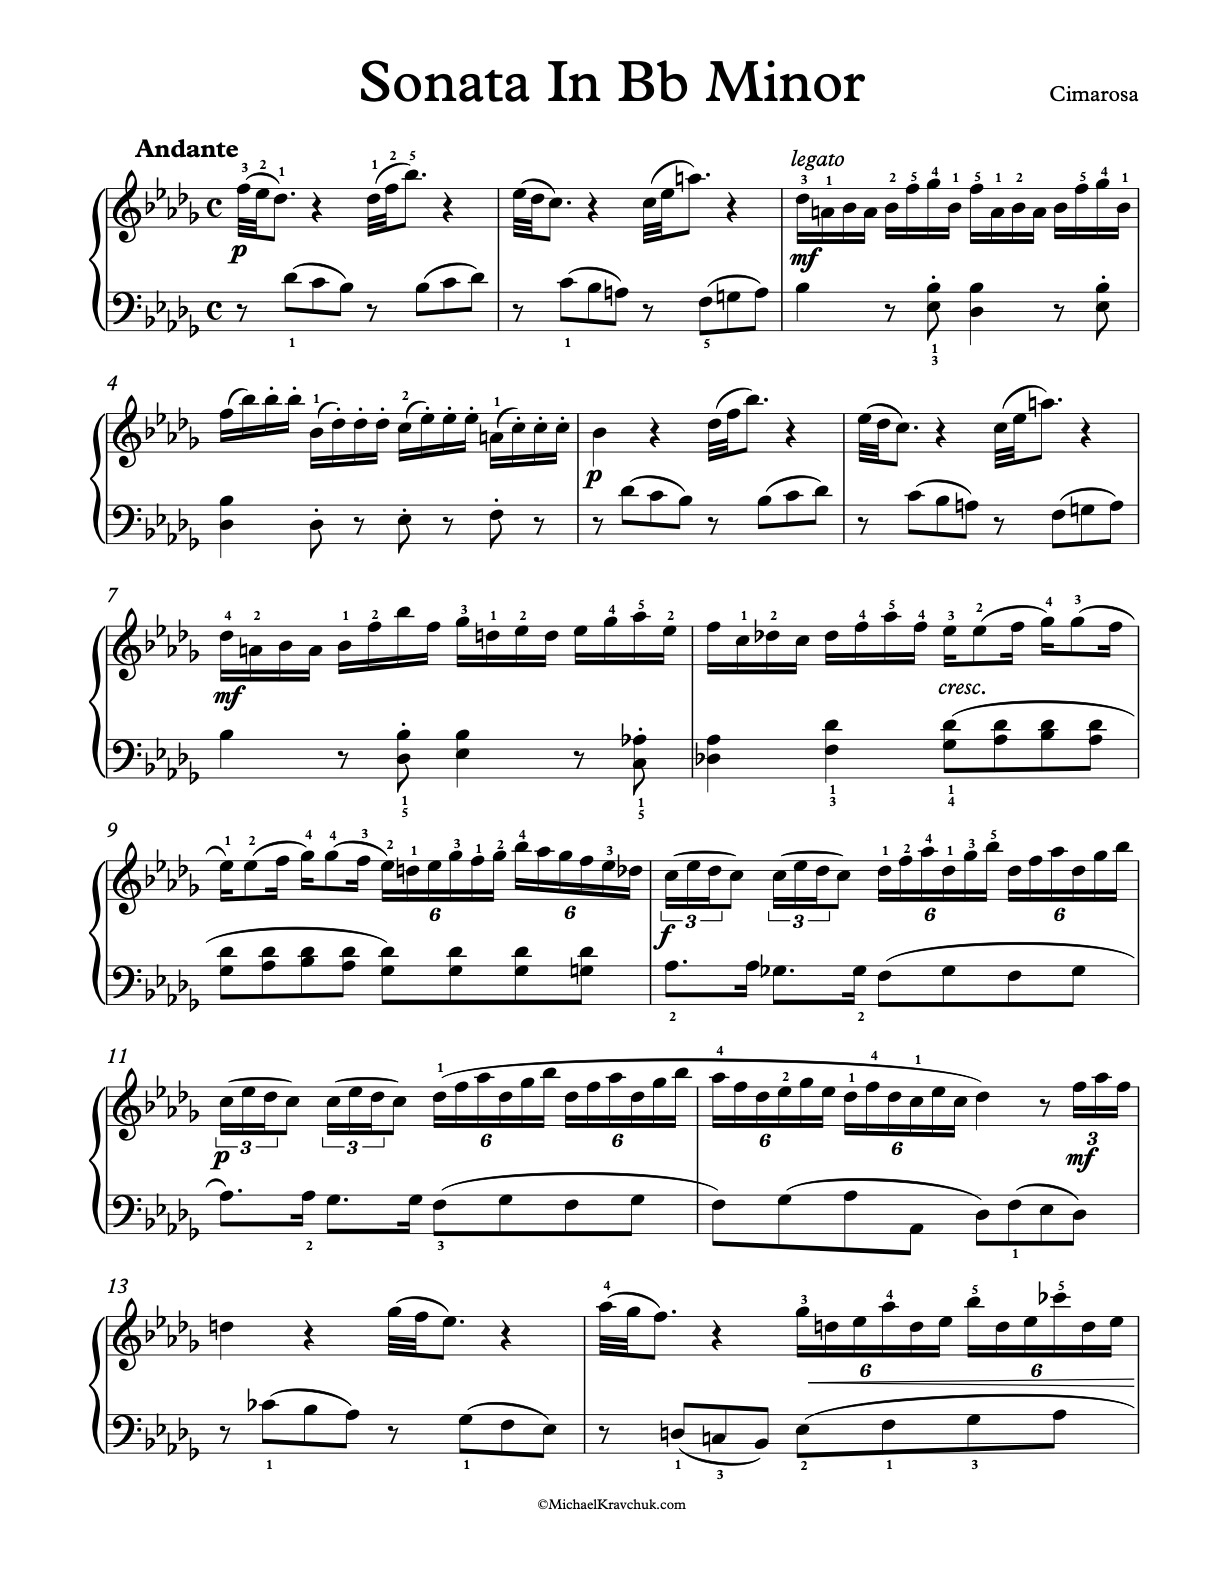 Sonata in Bb Minor Piano Sheet Music